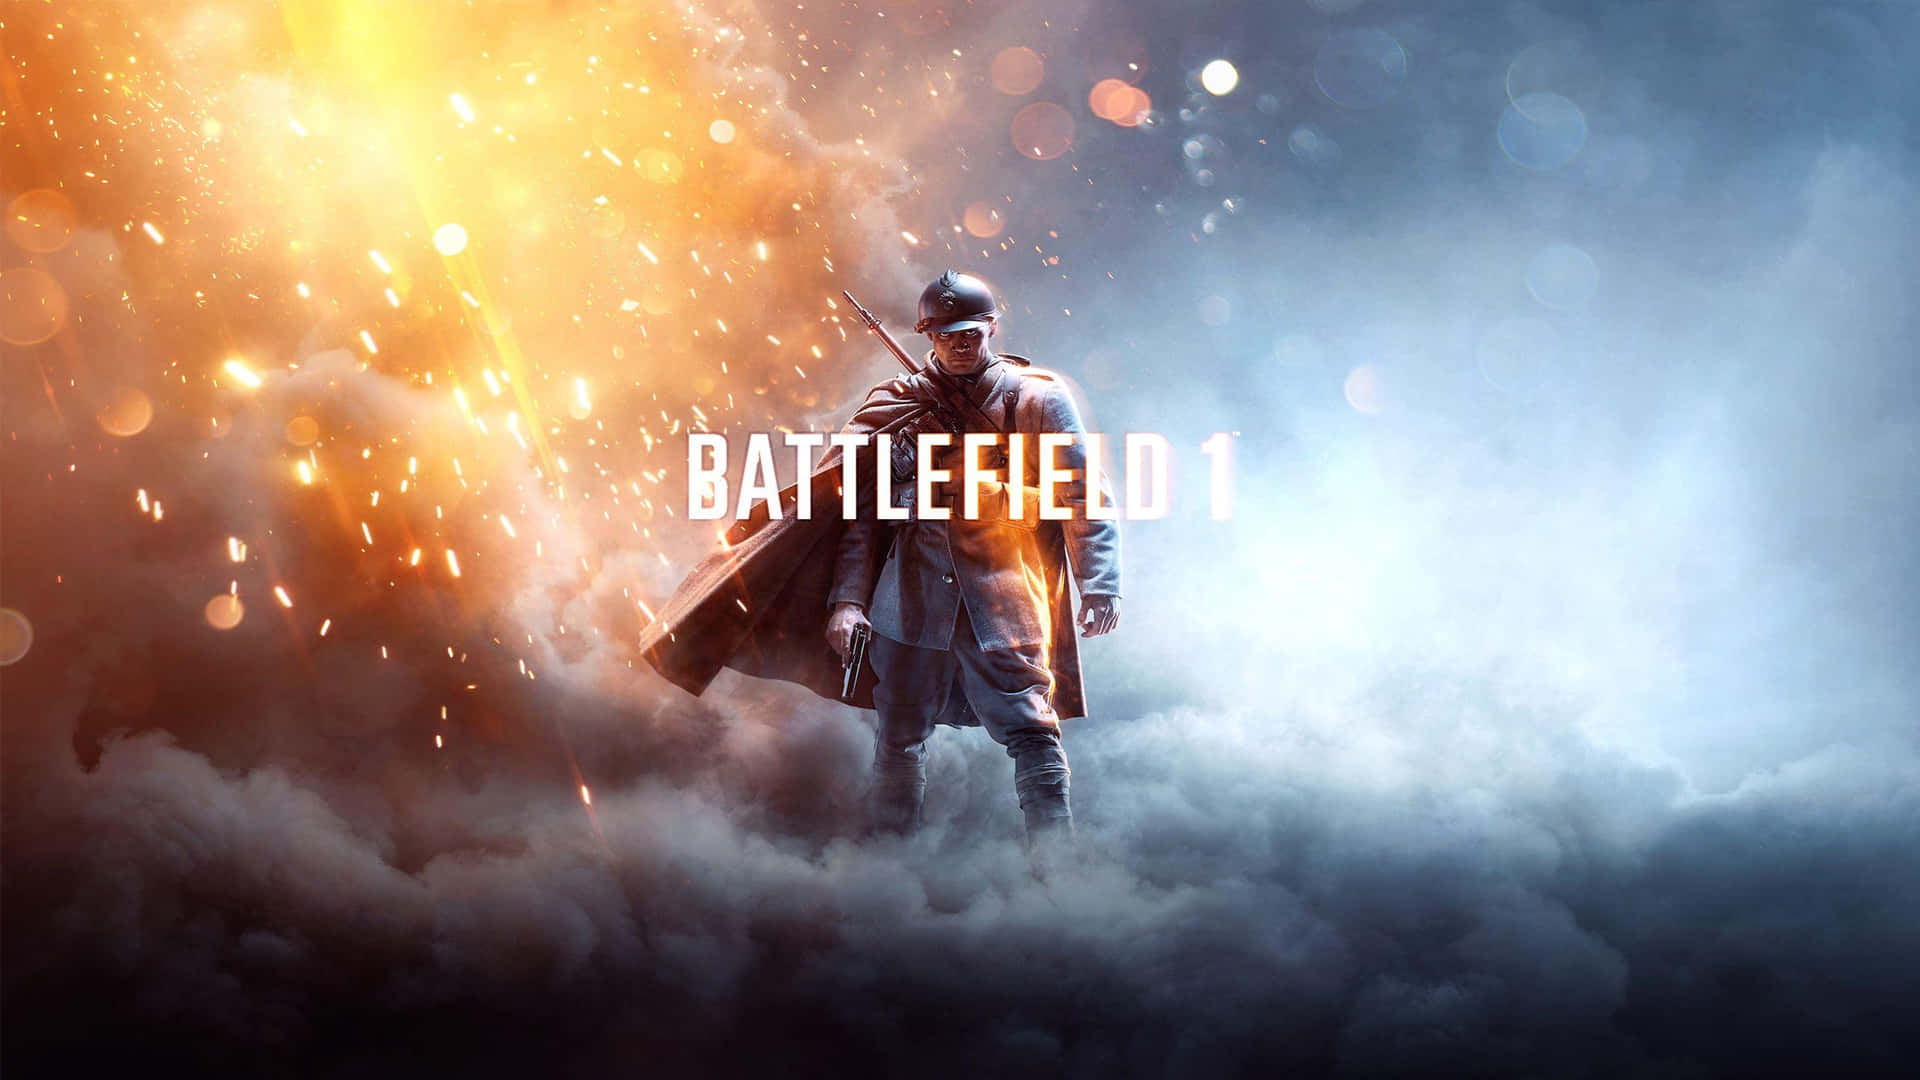 Stunning 1440p Battlefield 1 Background Image